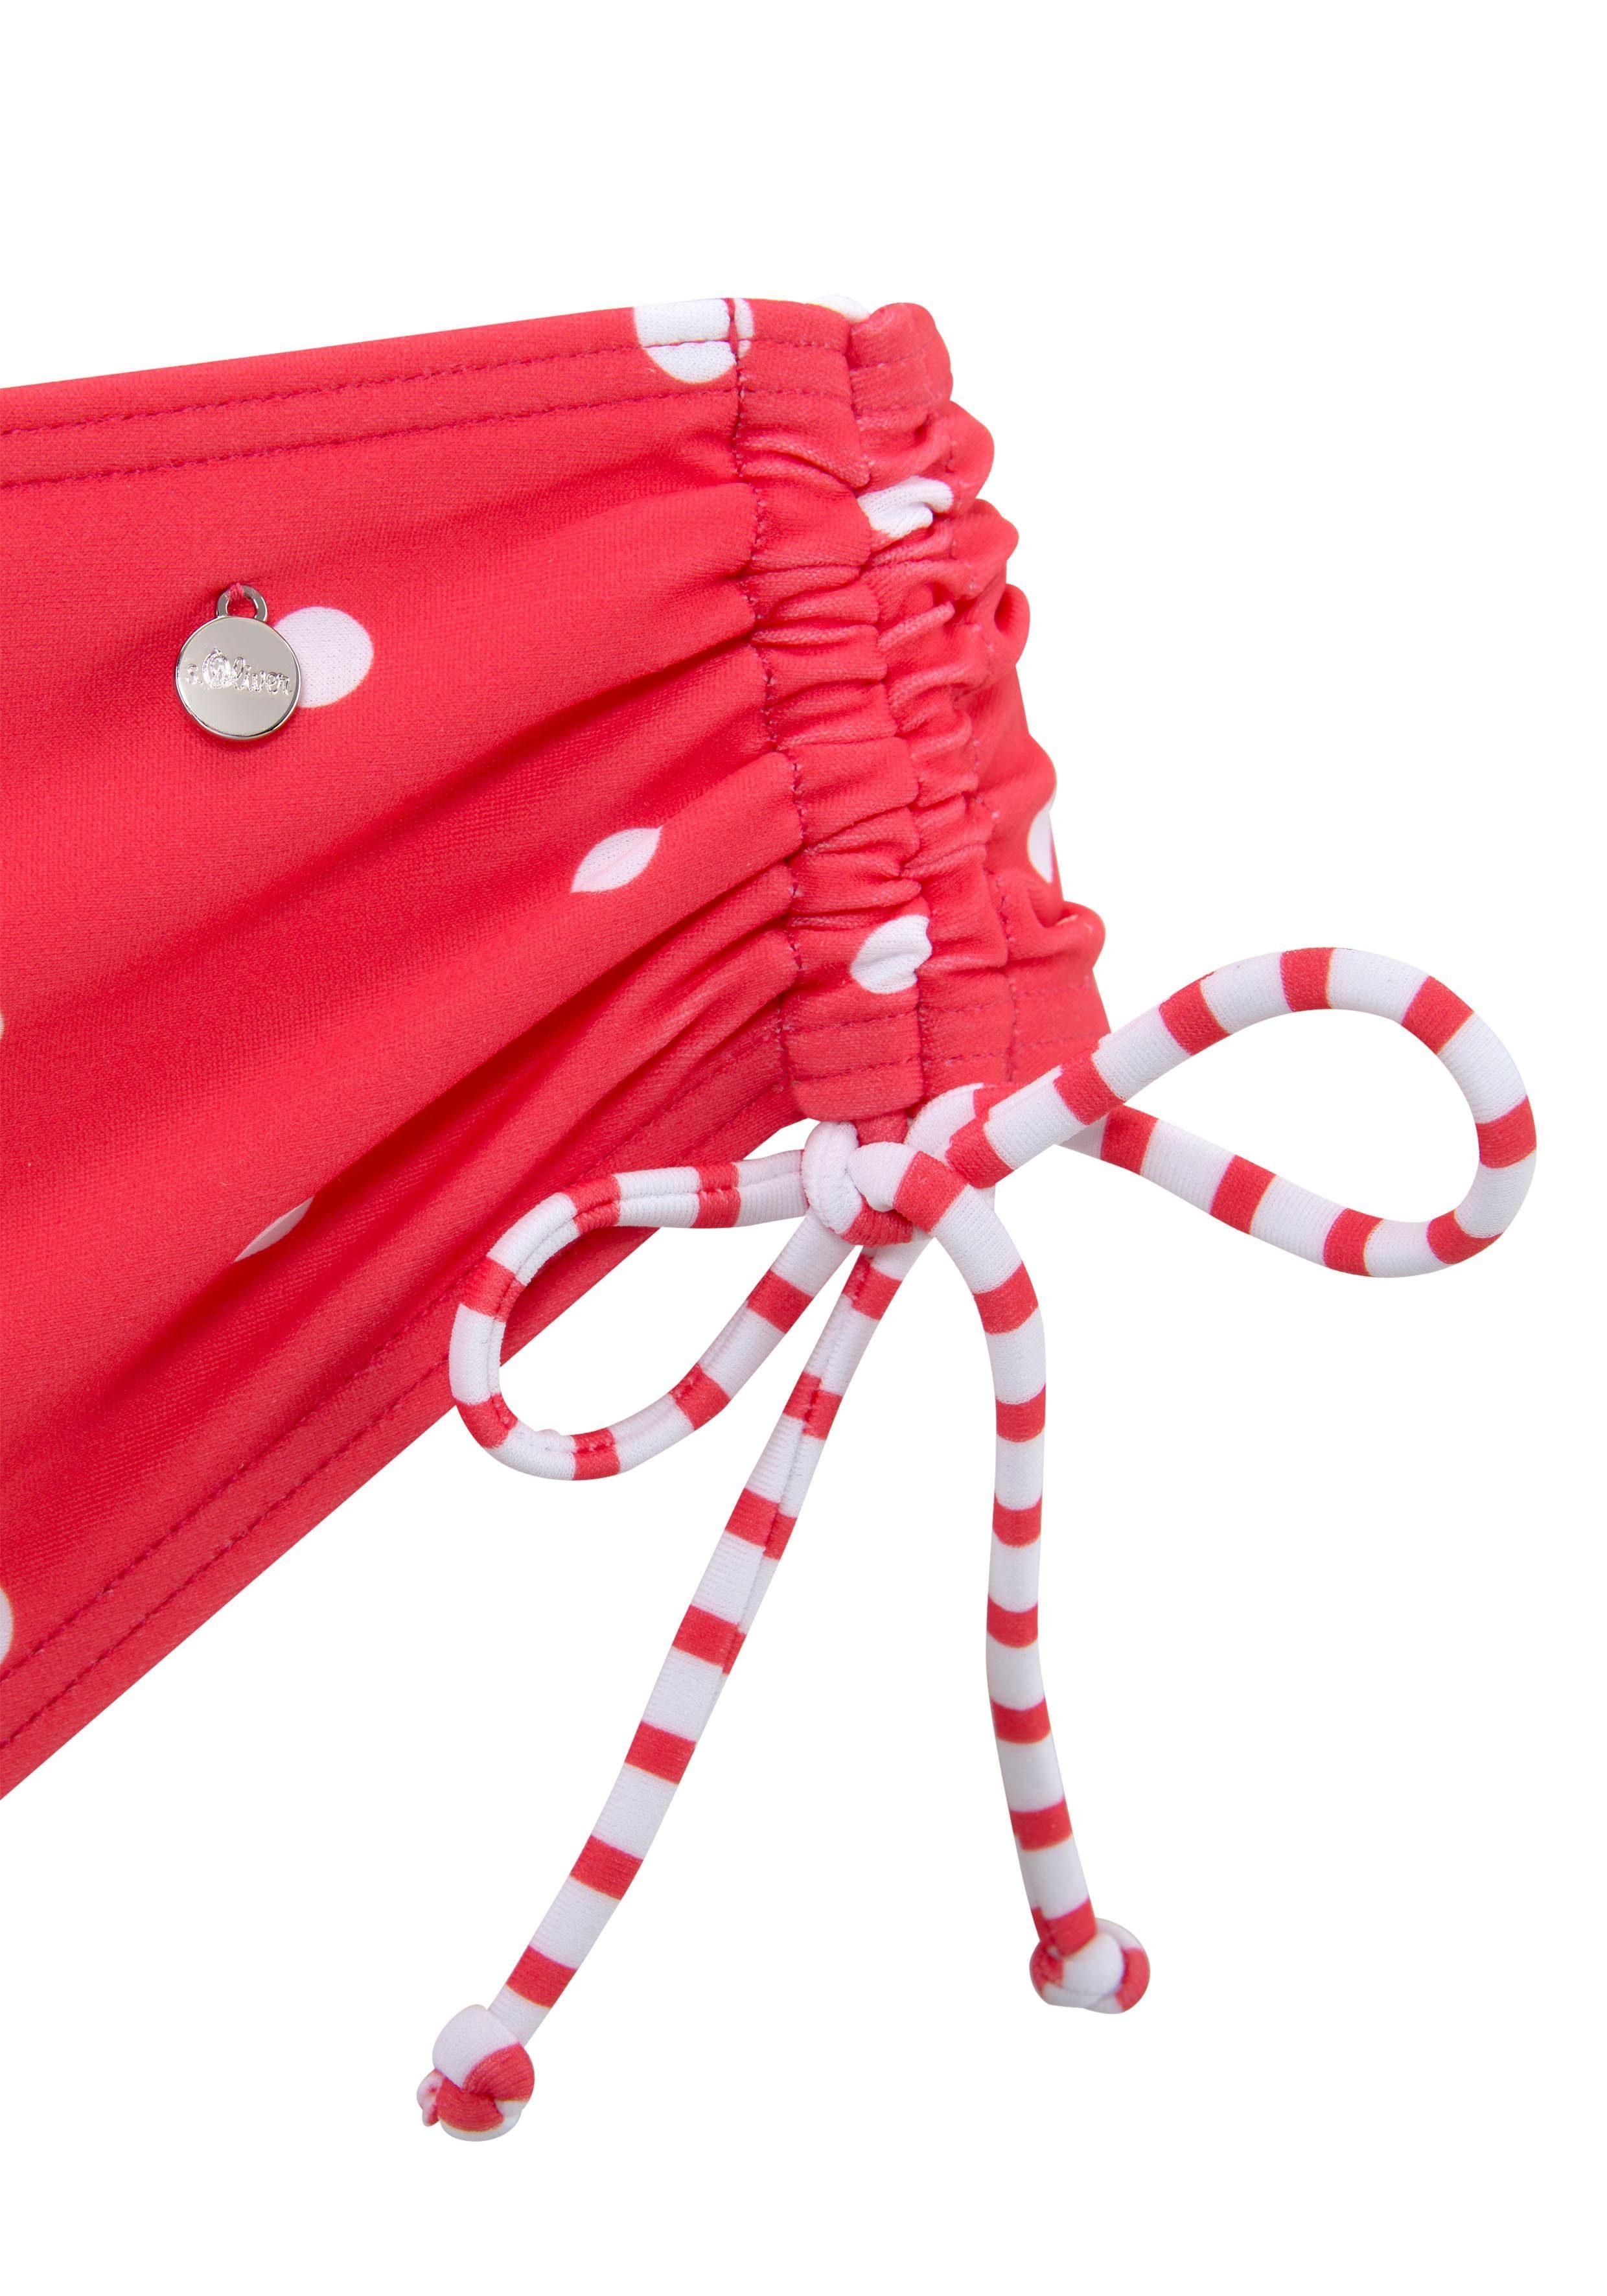 s.oliver red label beachwear bikinibroekje audrey opzij aan te passen rood